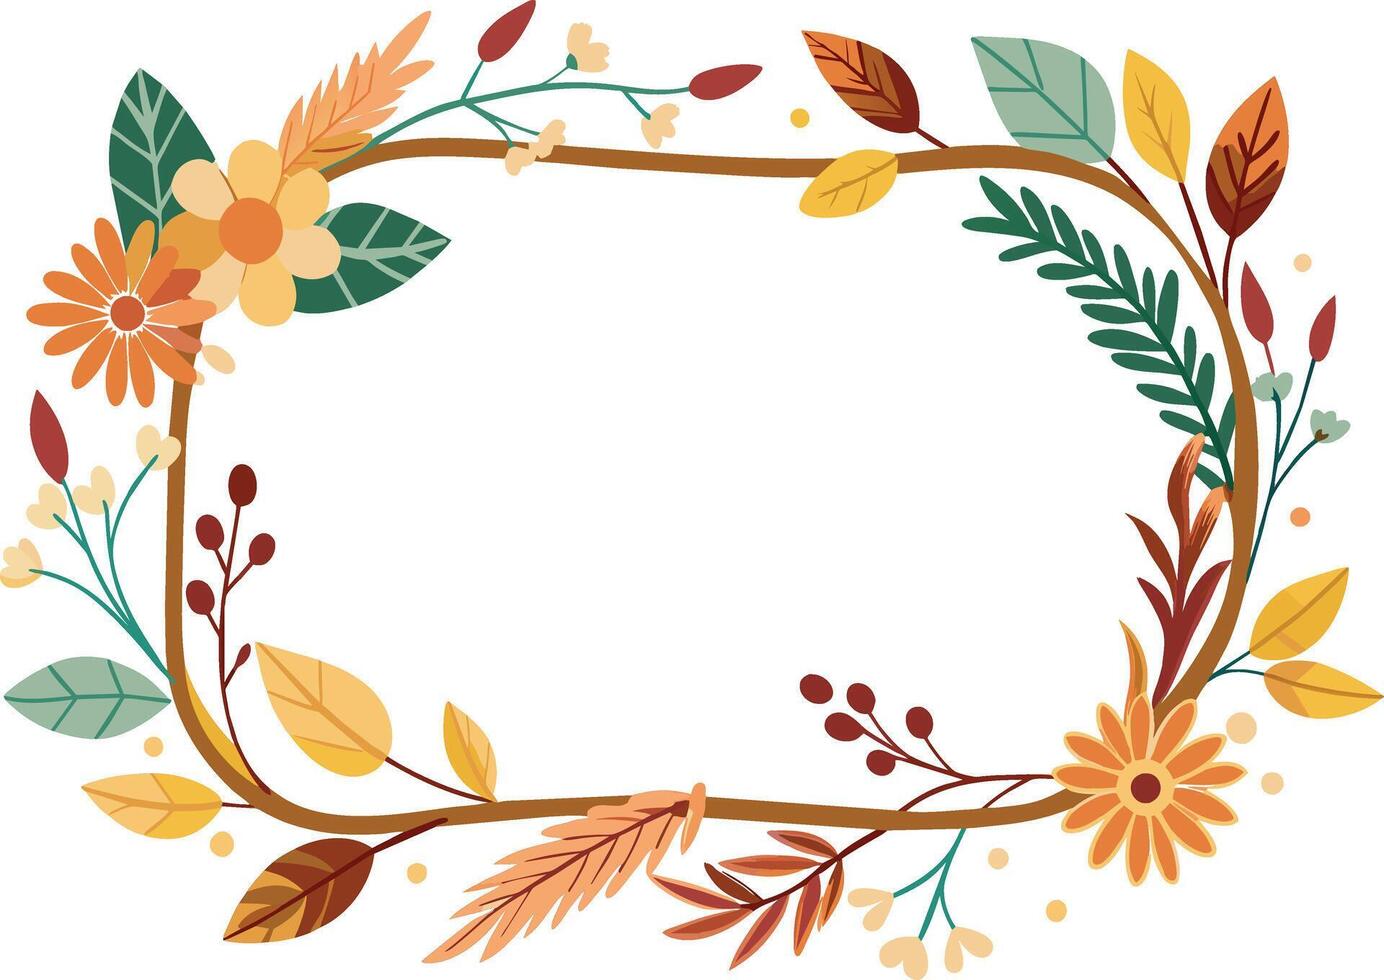 Rahmen kreisförmig mit Blumen und Blätter. Vektor Illustration Design